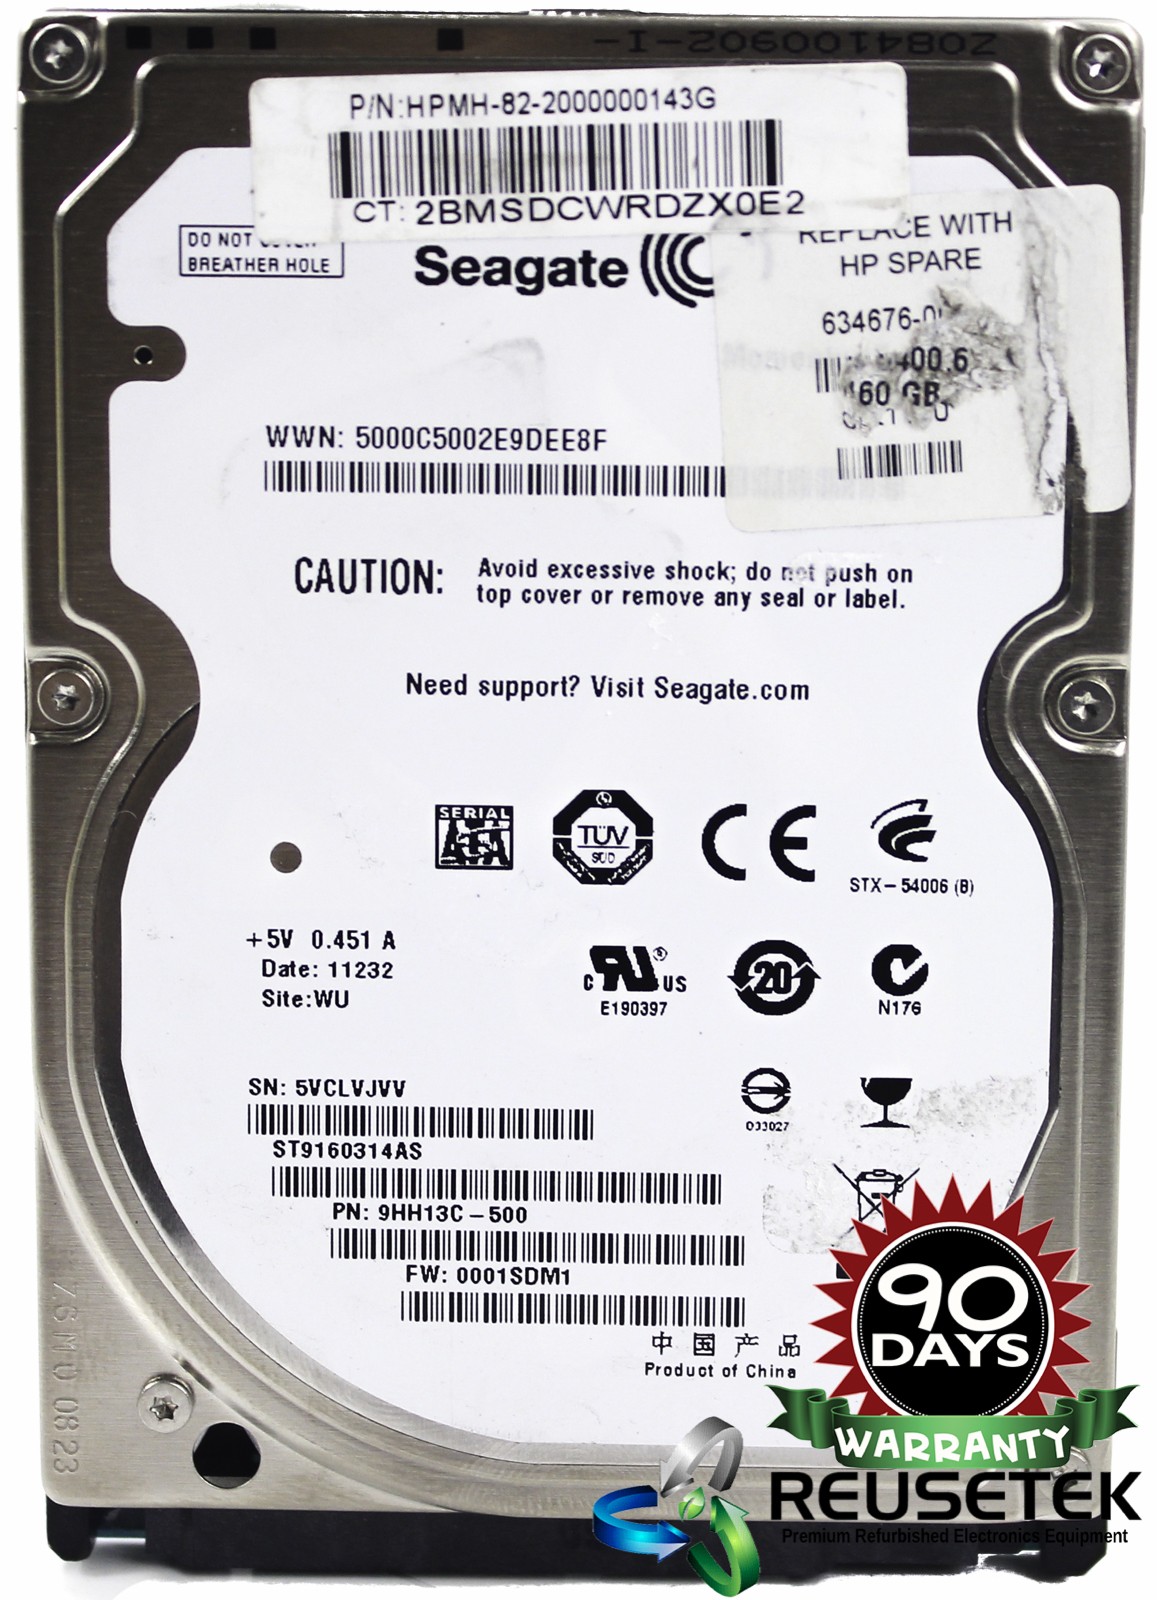 50003176960797290-SN12274778-Seagate ST9160314AS P/N: 9HH13C-500 160GB 2.5" Laptop SATA Hard Drive -image